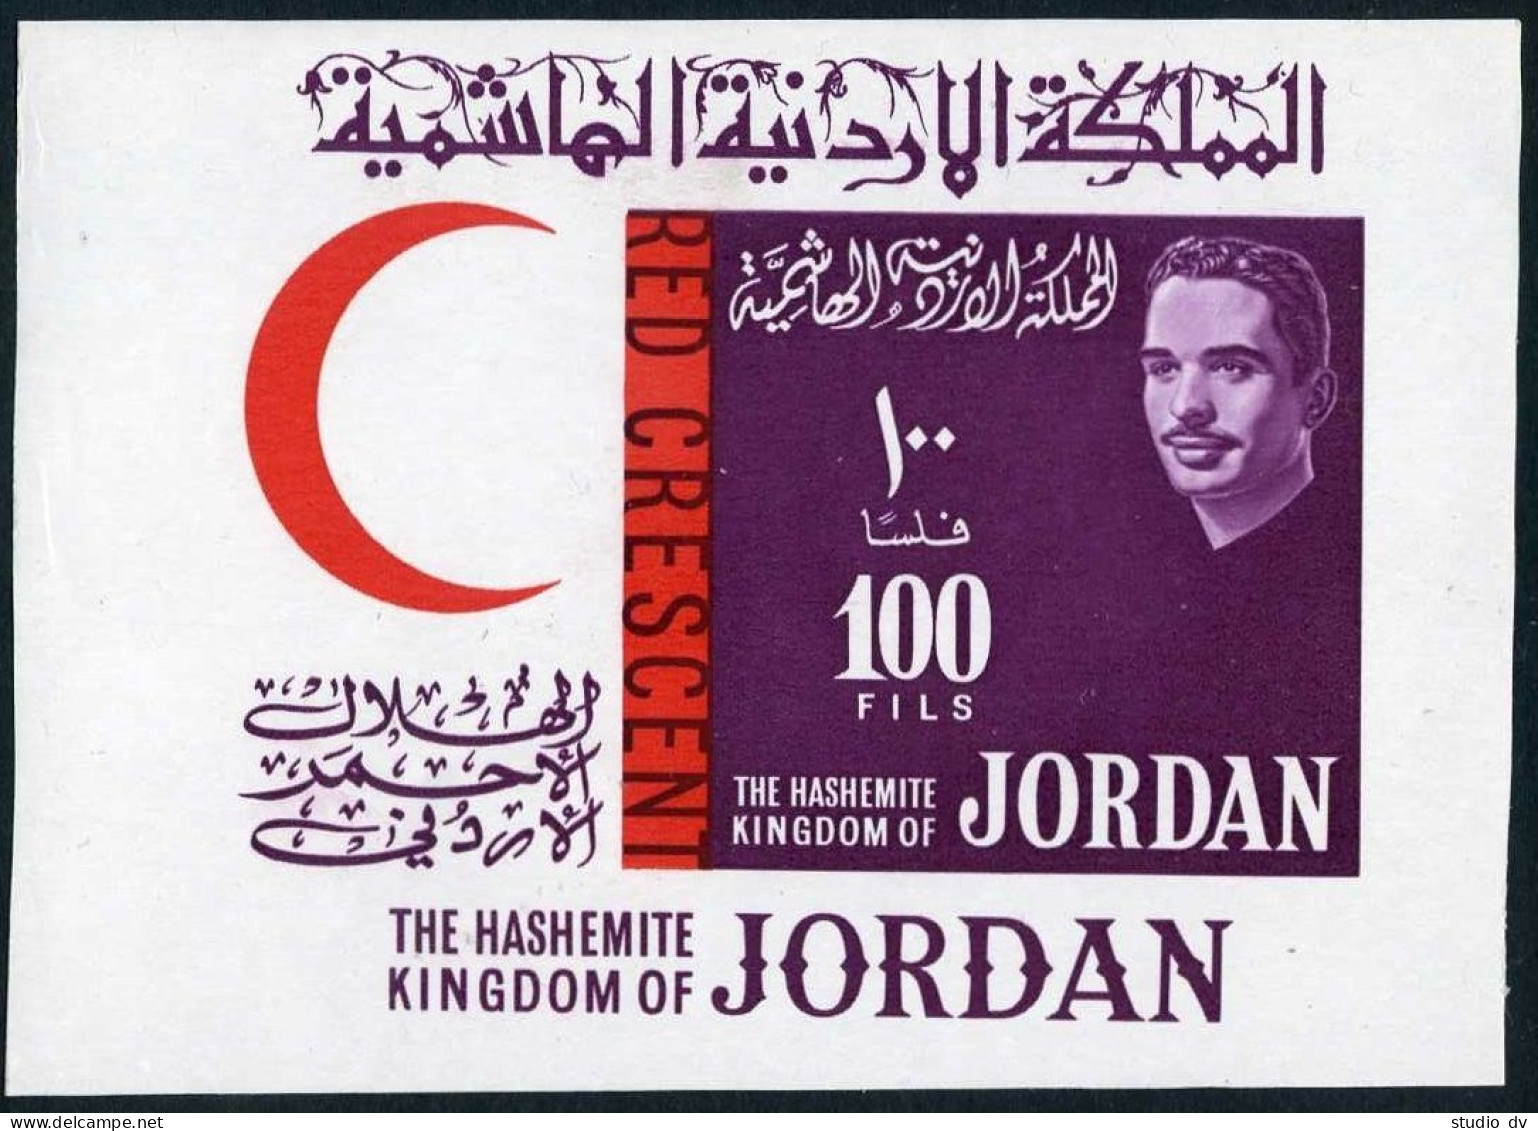 Jordan 407-412,412a,MNH.Michel 402-407,Bl.5. Red Crescent,Red Cross-100.Hussein. - Jordan